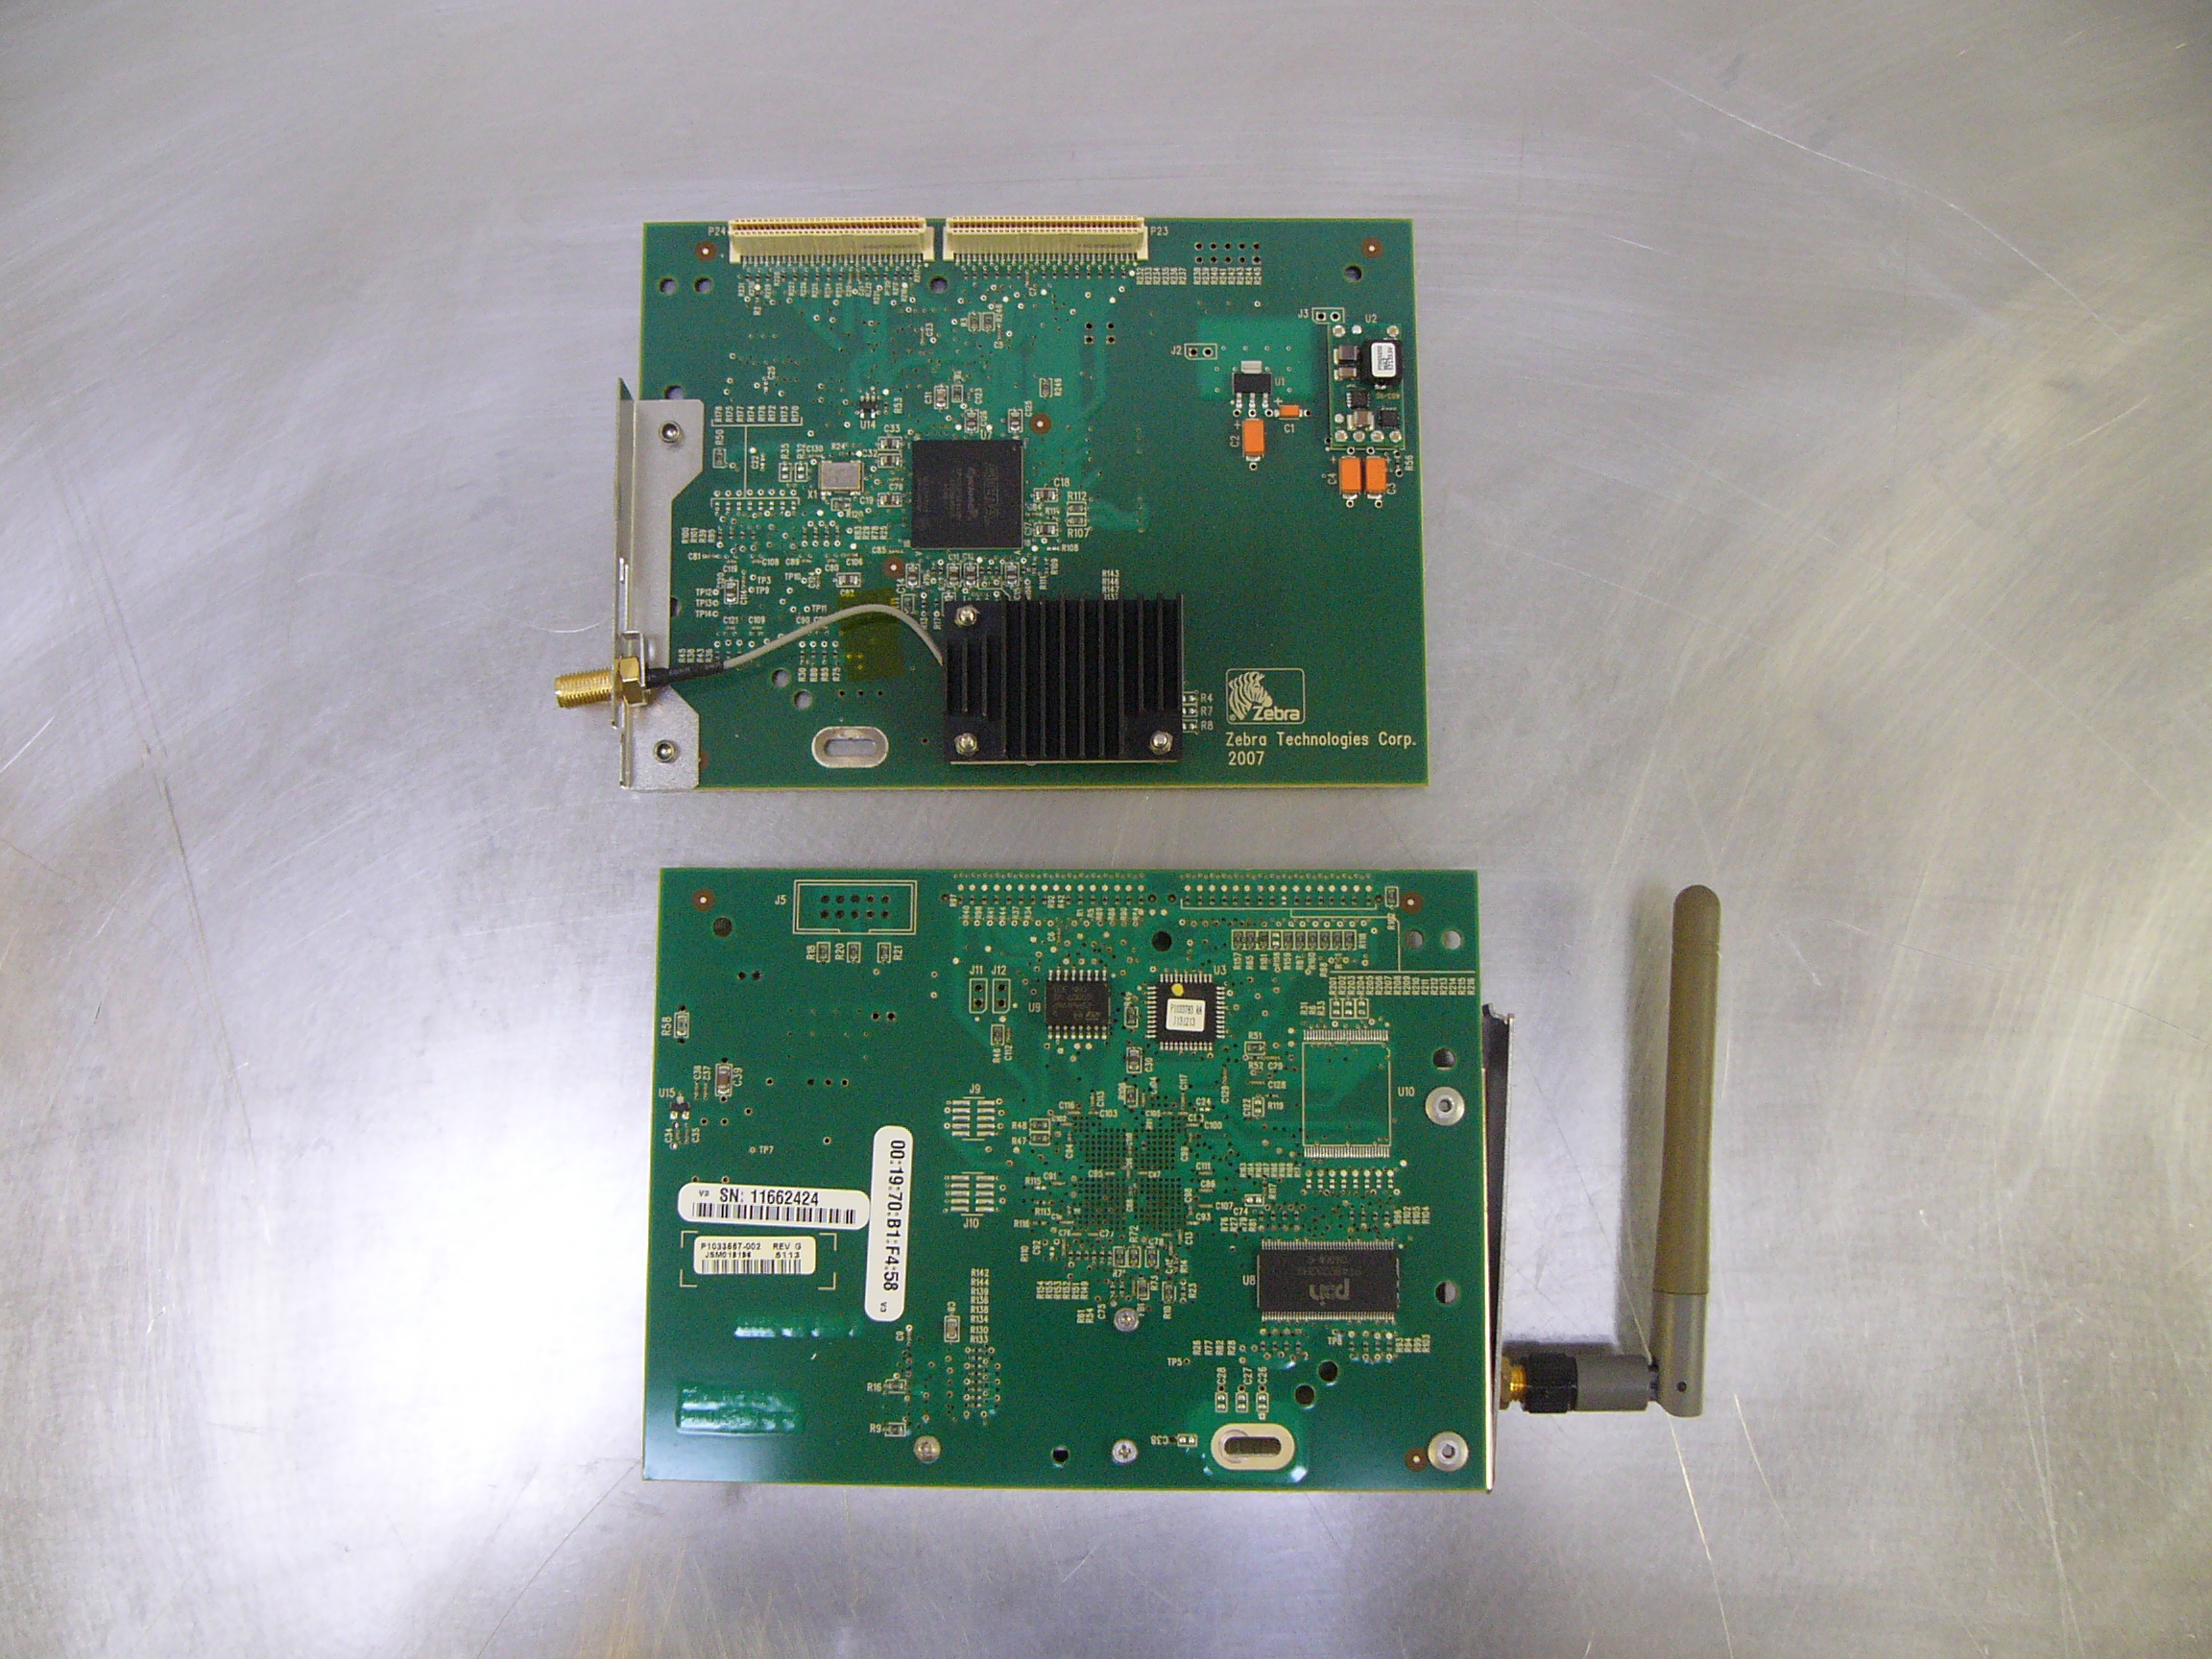 P1032273 -  - P1032273, 105SLPlus & Xi4 Series ZebraNet Wireless b/g Print Server